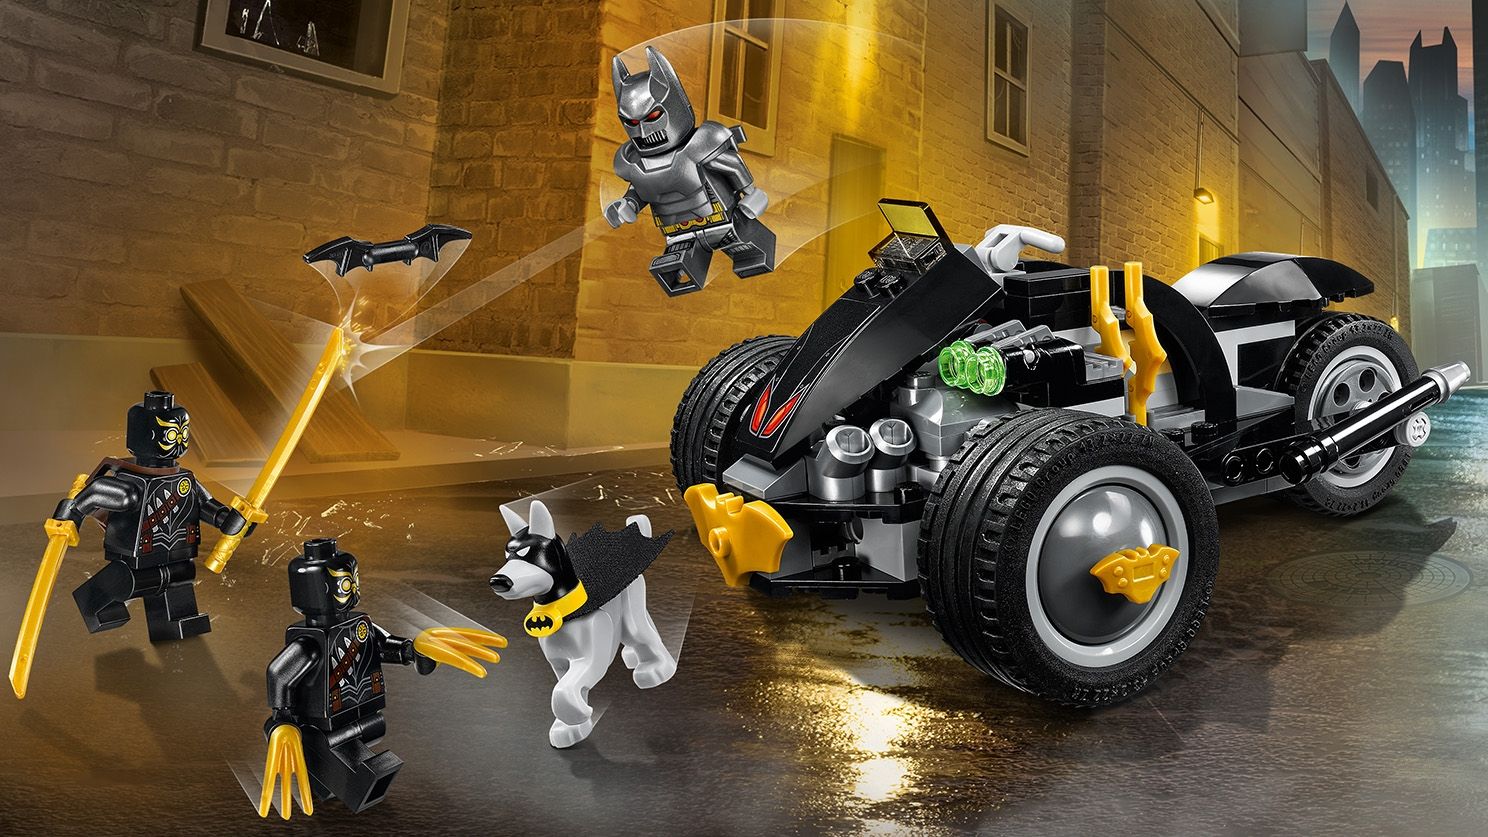 LEGO Super Heroes 76110 Batman™: Attacke der Talons LEGO_76110_WEB_SEC01_1488.jpg